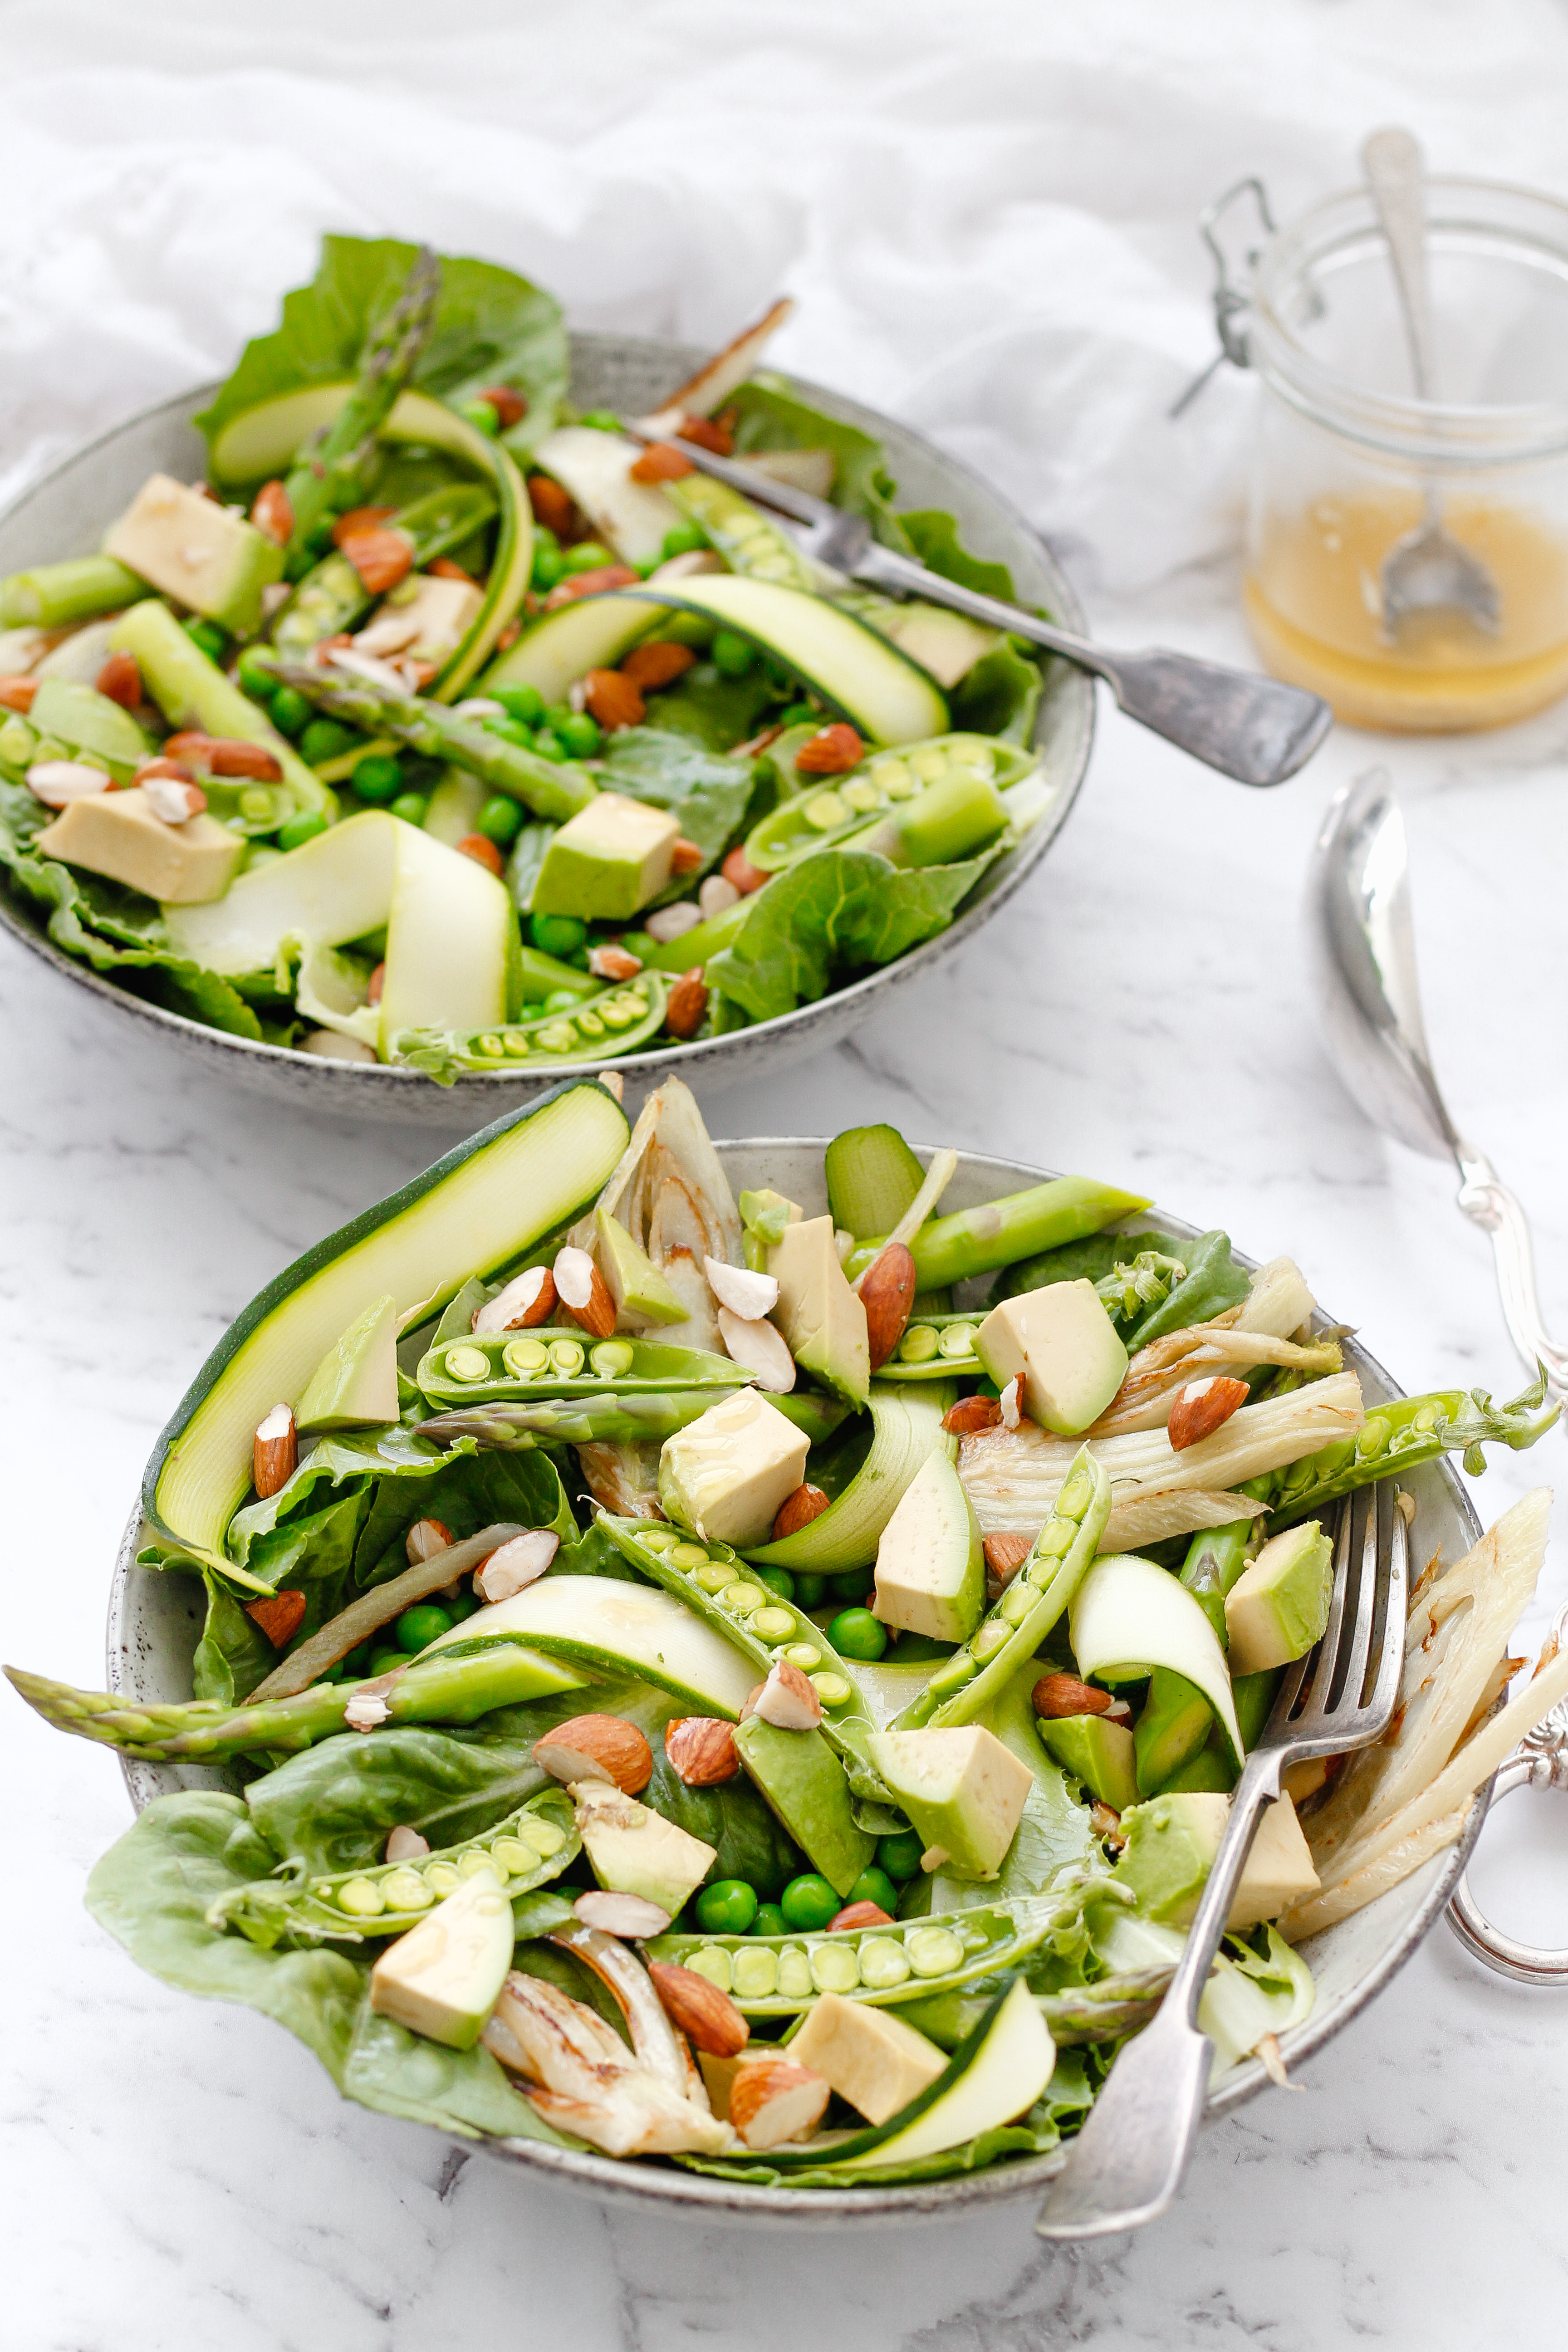 Fresh, bright and green salad